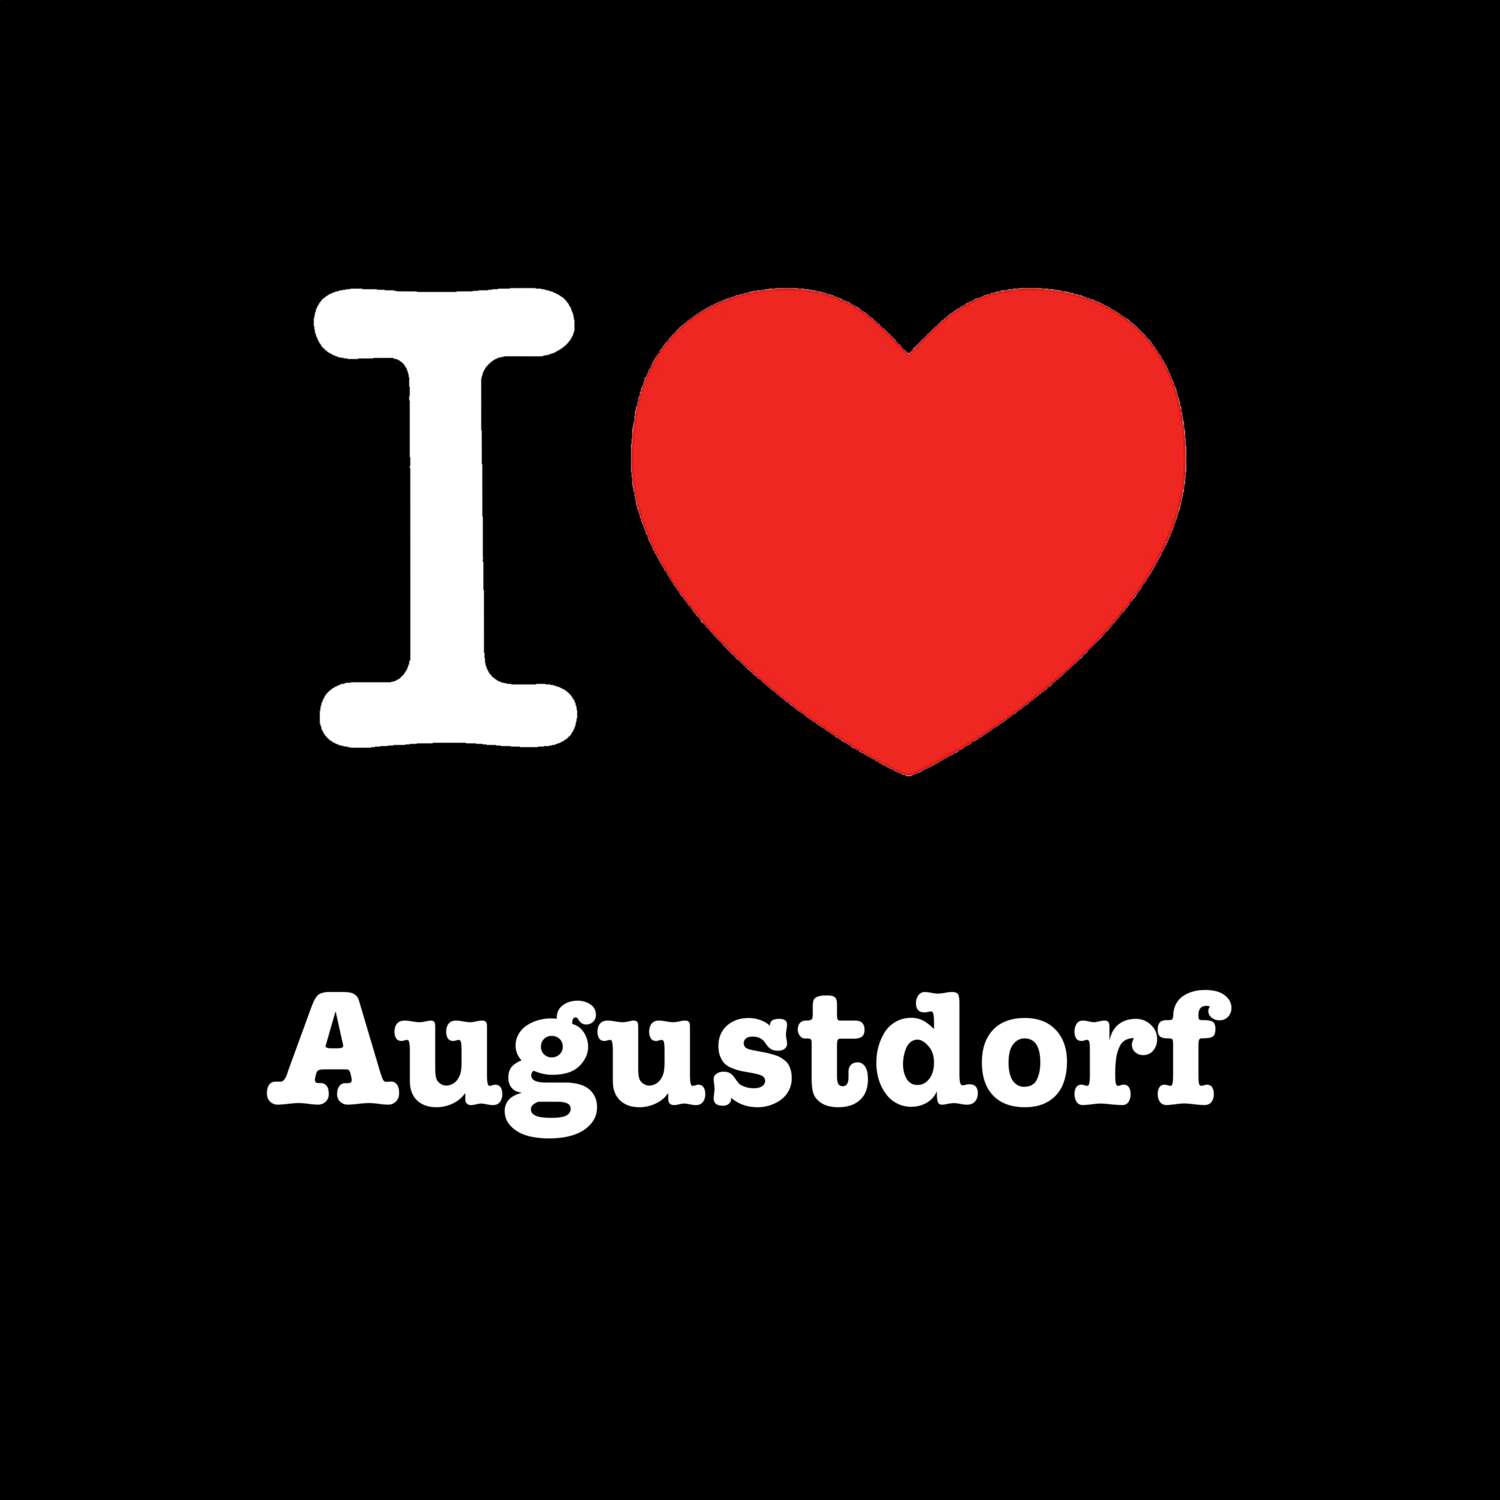 Augustdorf T-Shirt »I love«